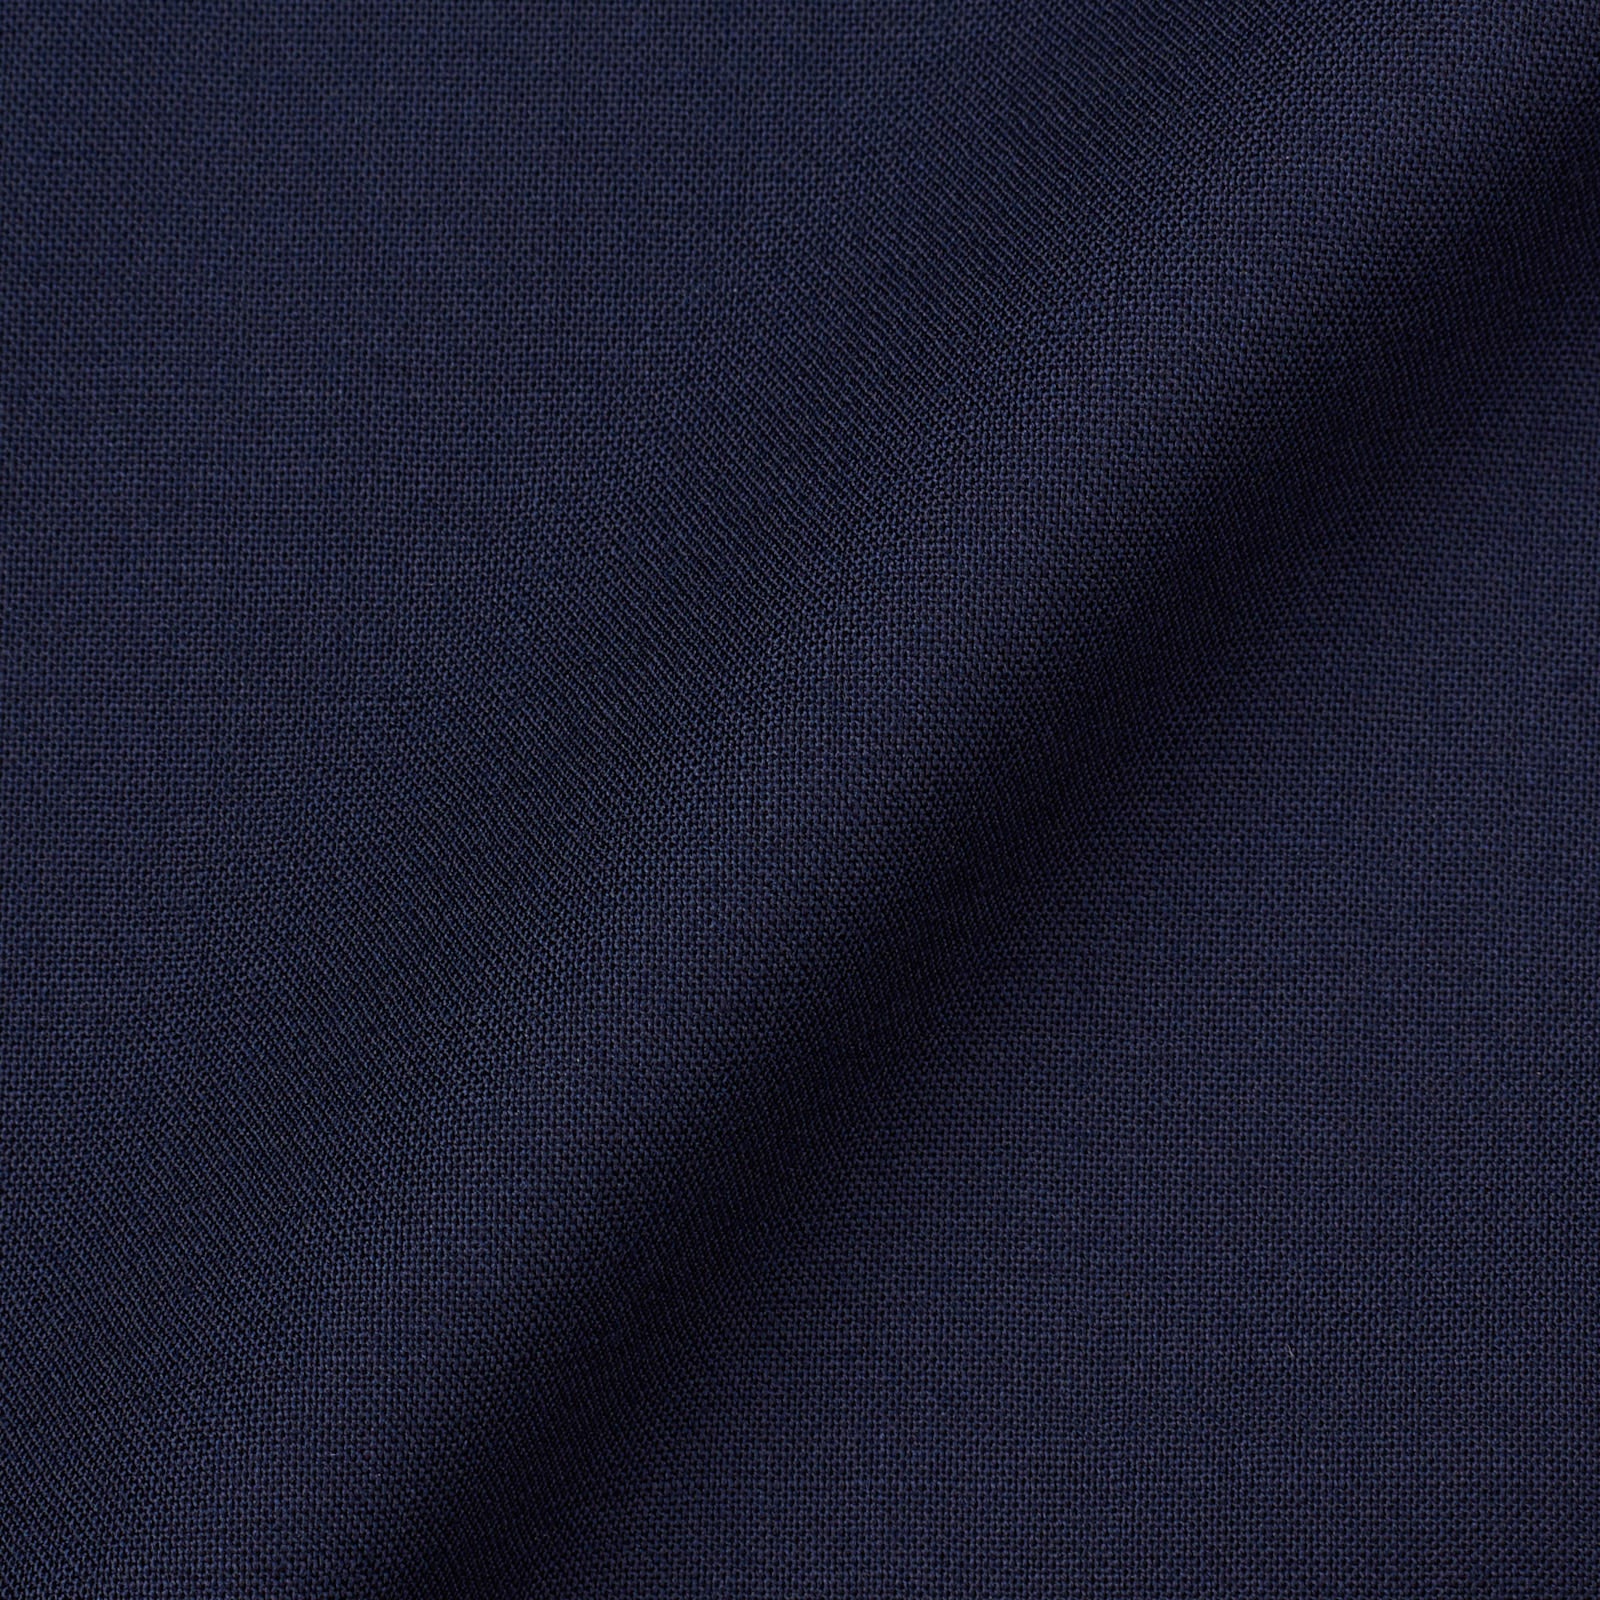 BOGLIOLI Milano "K. Jacket" Navy Blue Virgin Wool Unlined Suit NEW Slim Fit BOGLIOLI